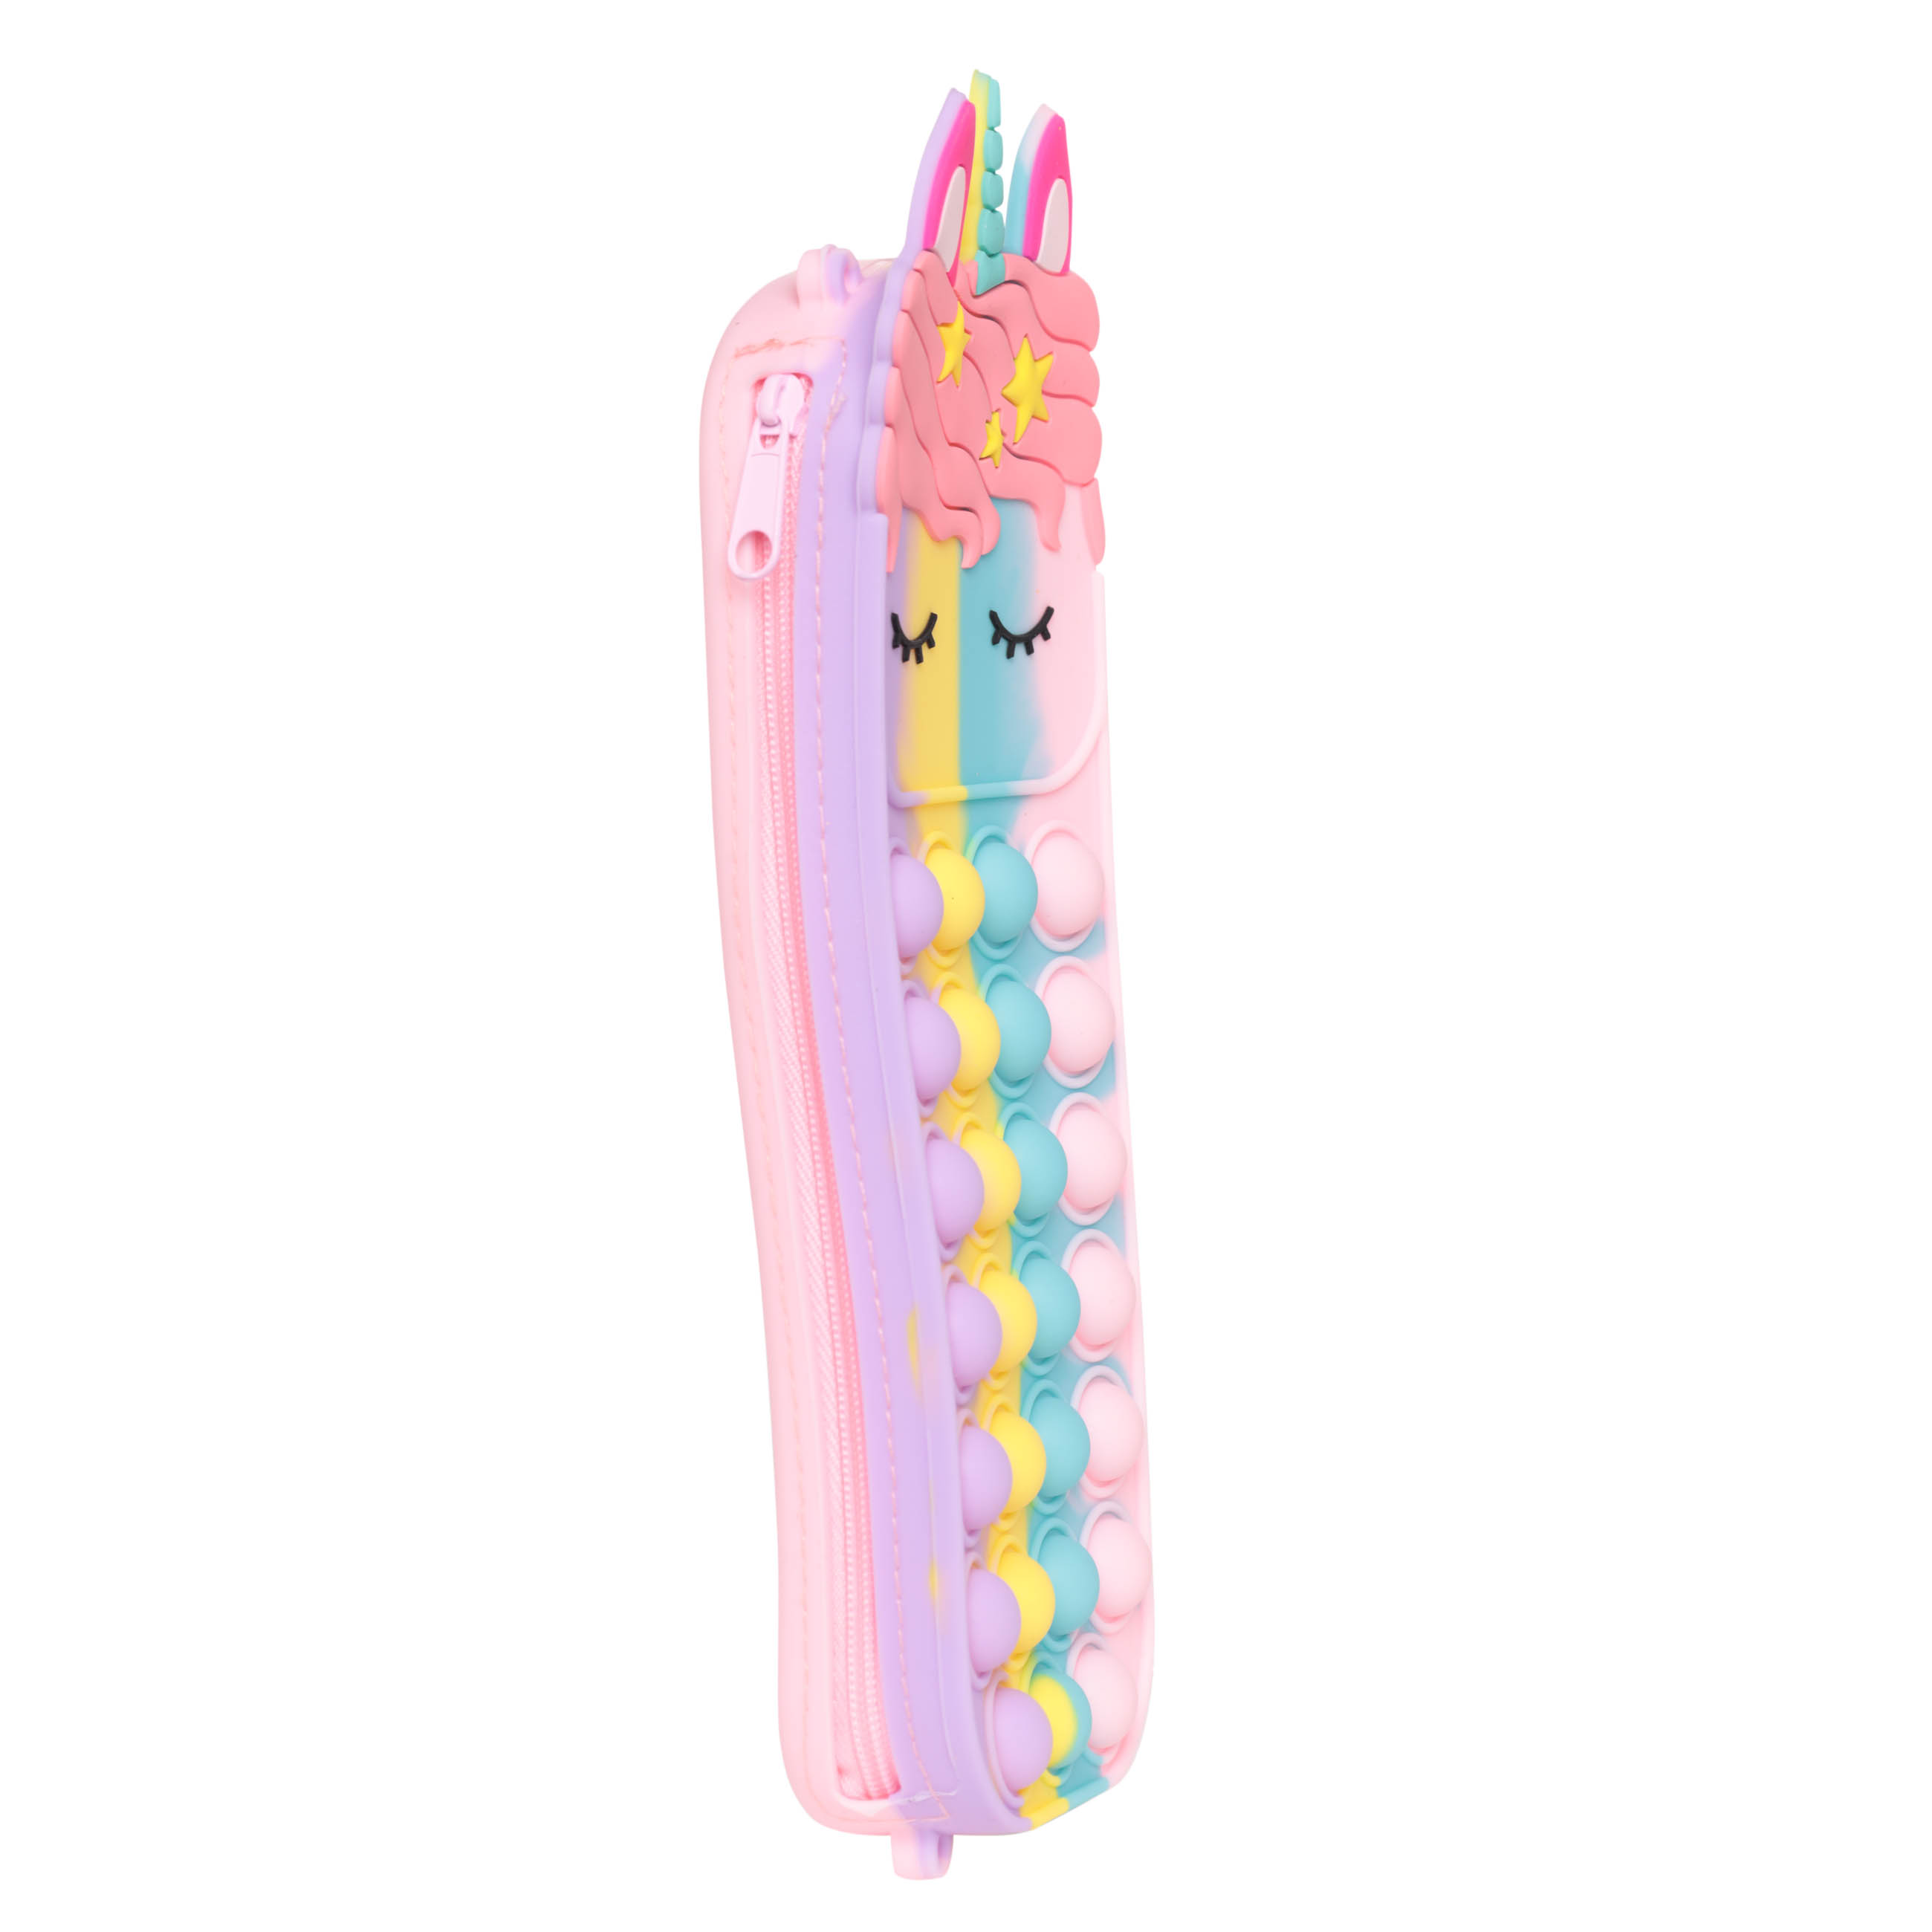 Pencil case, Pop-it, 23x8 cm, Silicone, color, Unicorn, Unicorn изображение № 2